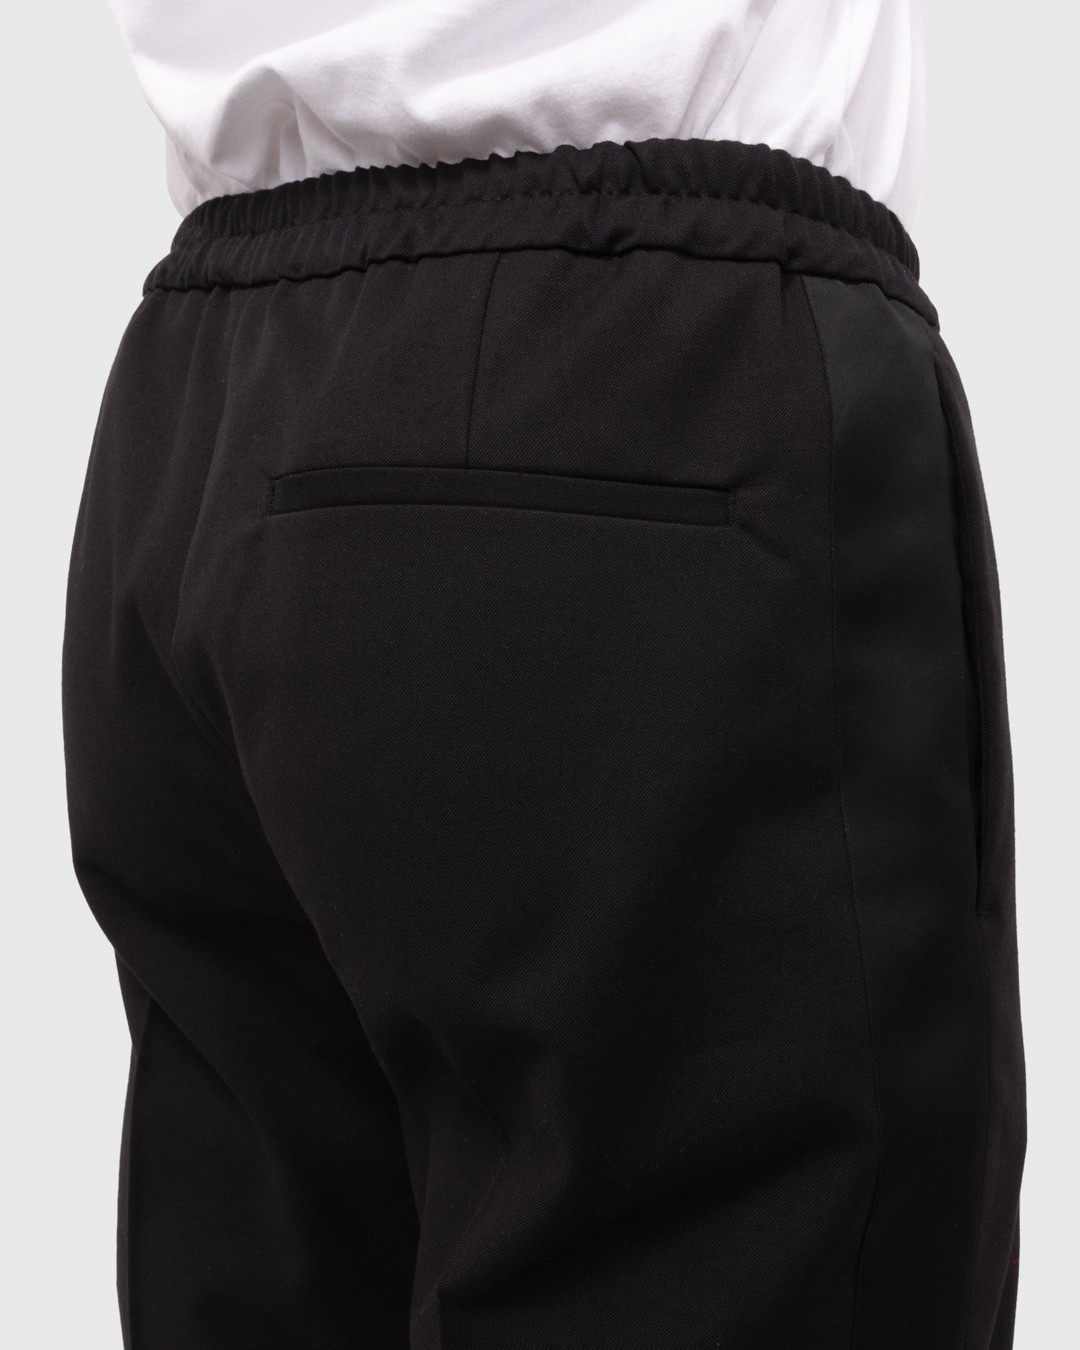 Dries van Noten – Parkino Pants Black - Pants - Black - Image 5